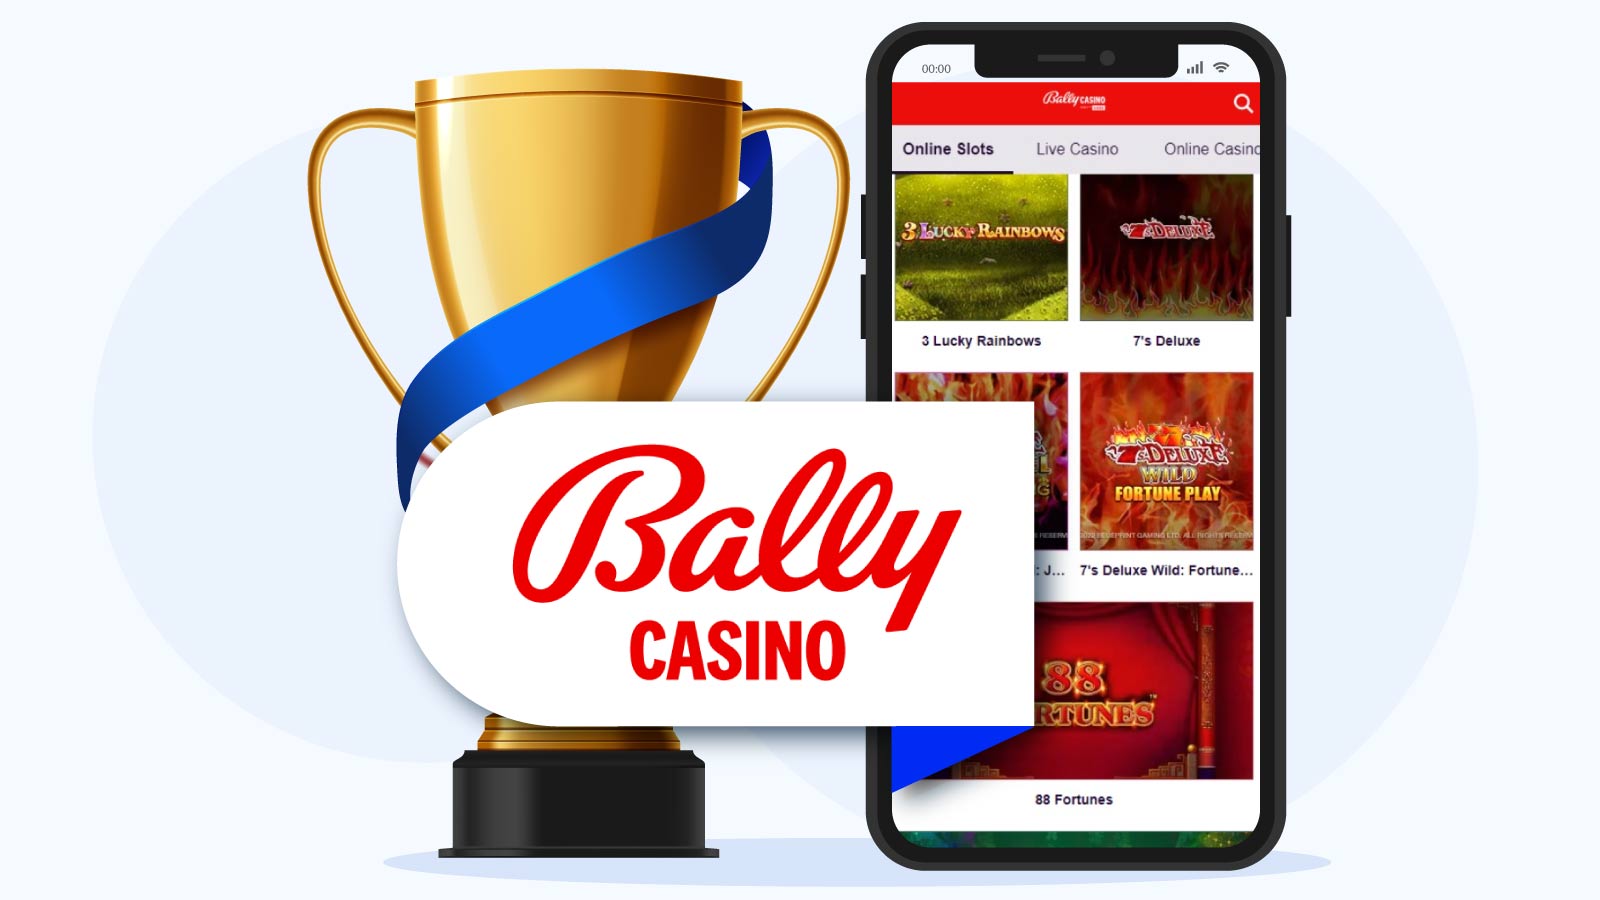 Bally-Mobile-Casino The-overall-best-mobile-casino